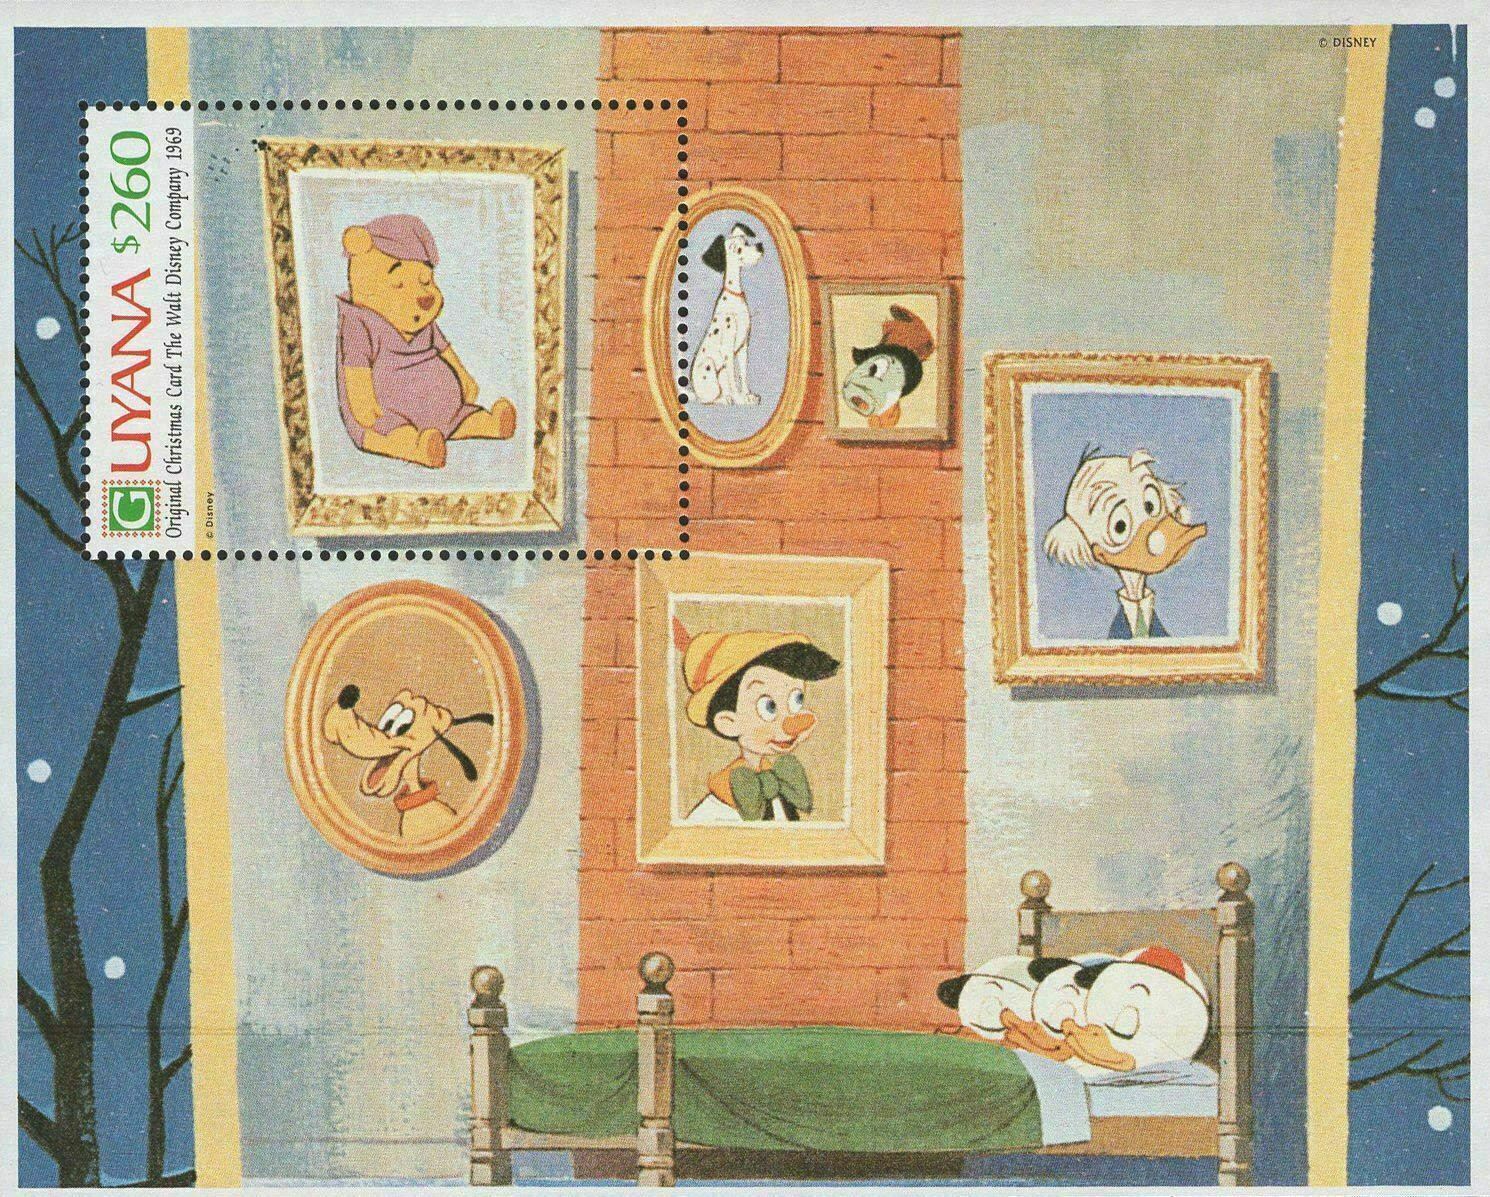 Disney Stamp Christmas Card Pluto Dalmatian Pooh Pinocchio Souvenir Sheet Mnh